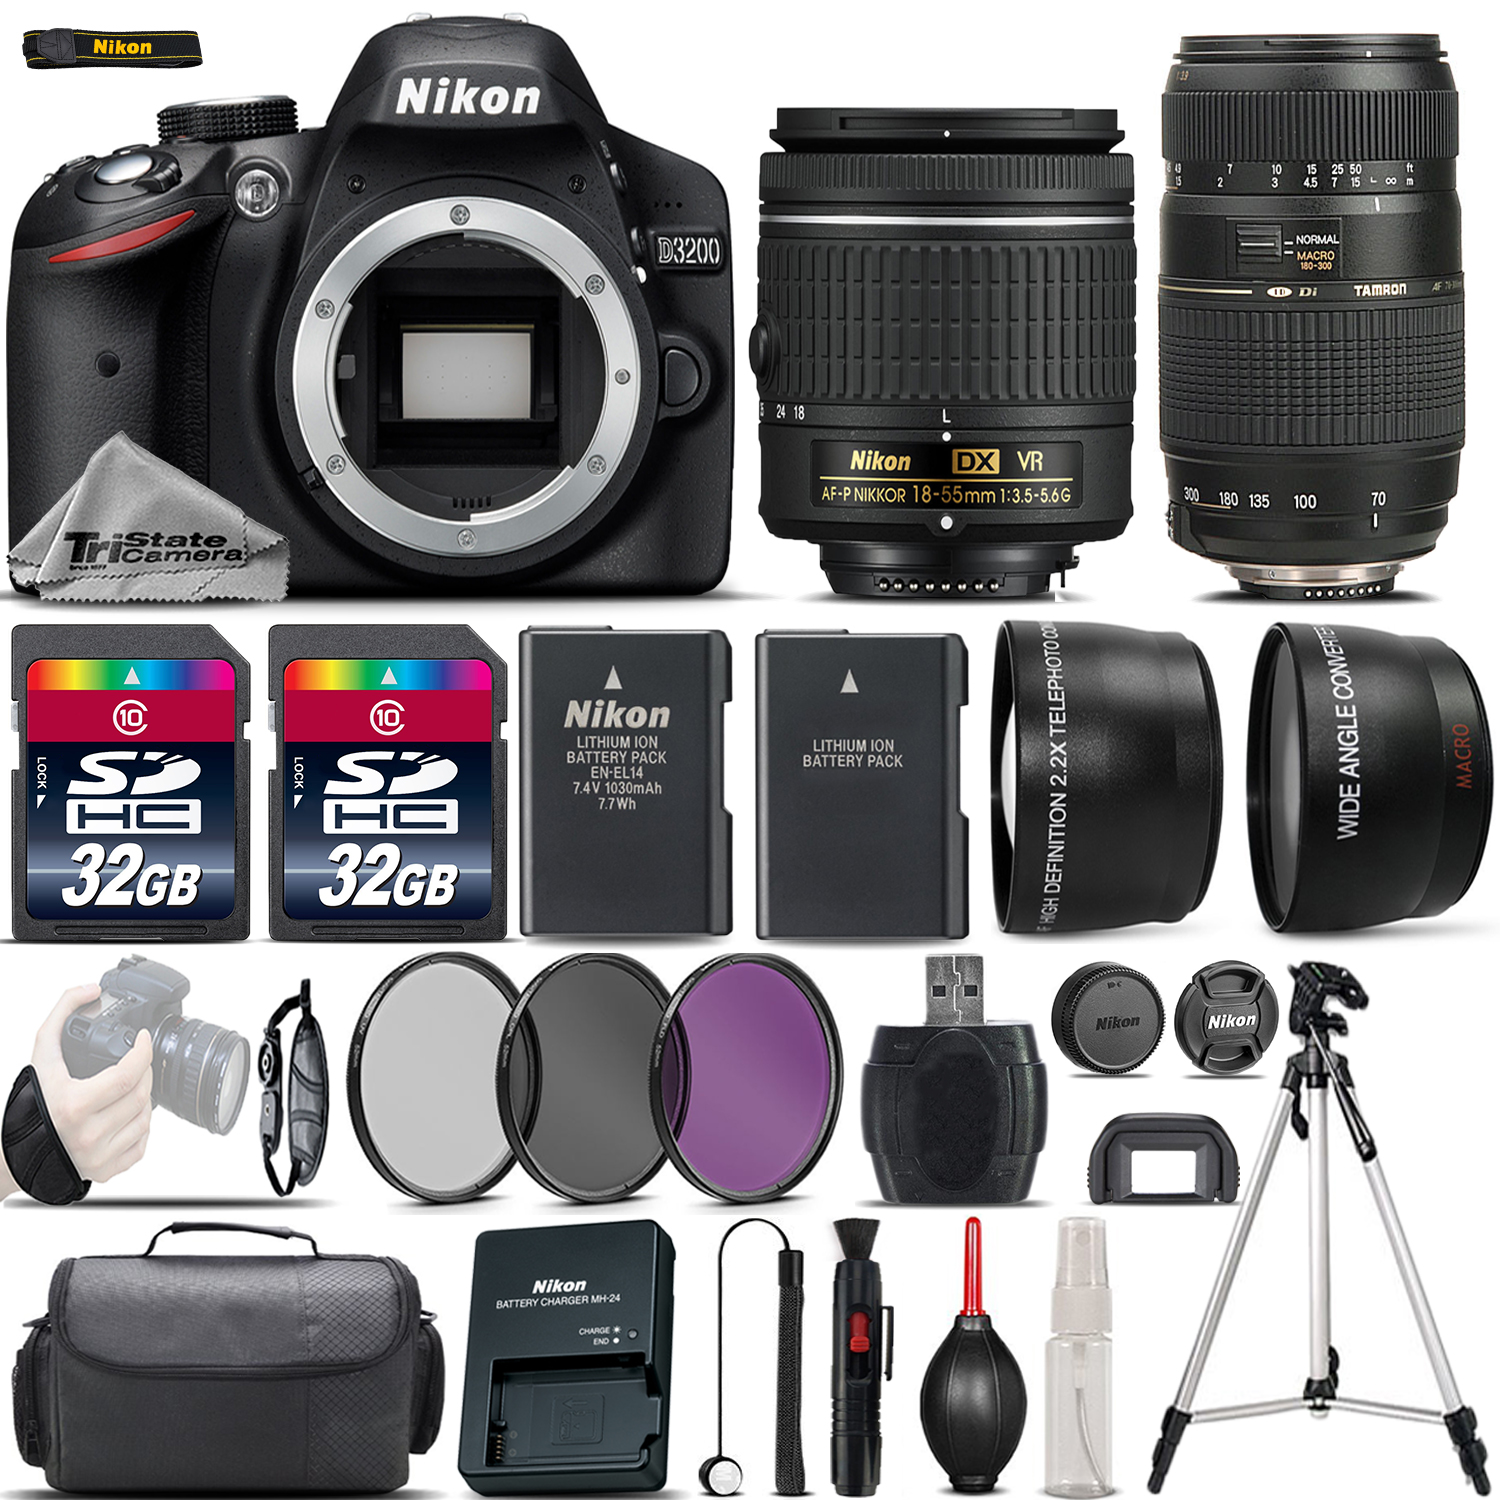 D3200 Digital SLR Camera + 18-55mm VR + 70-300mm + 64GB & More -4 Lens Kit *FREE SHIPPING*